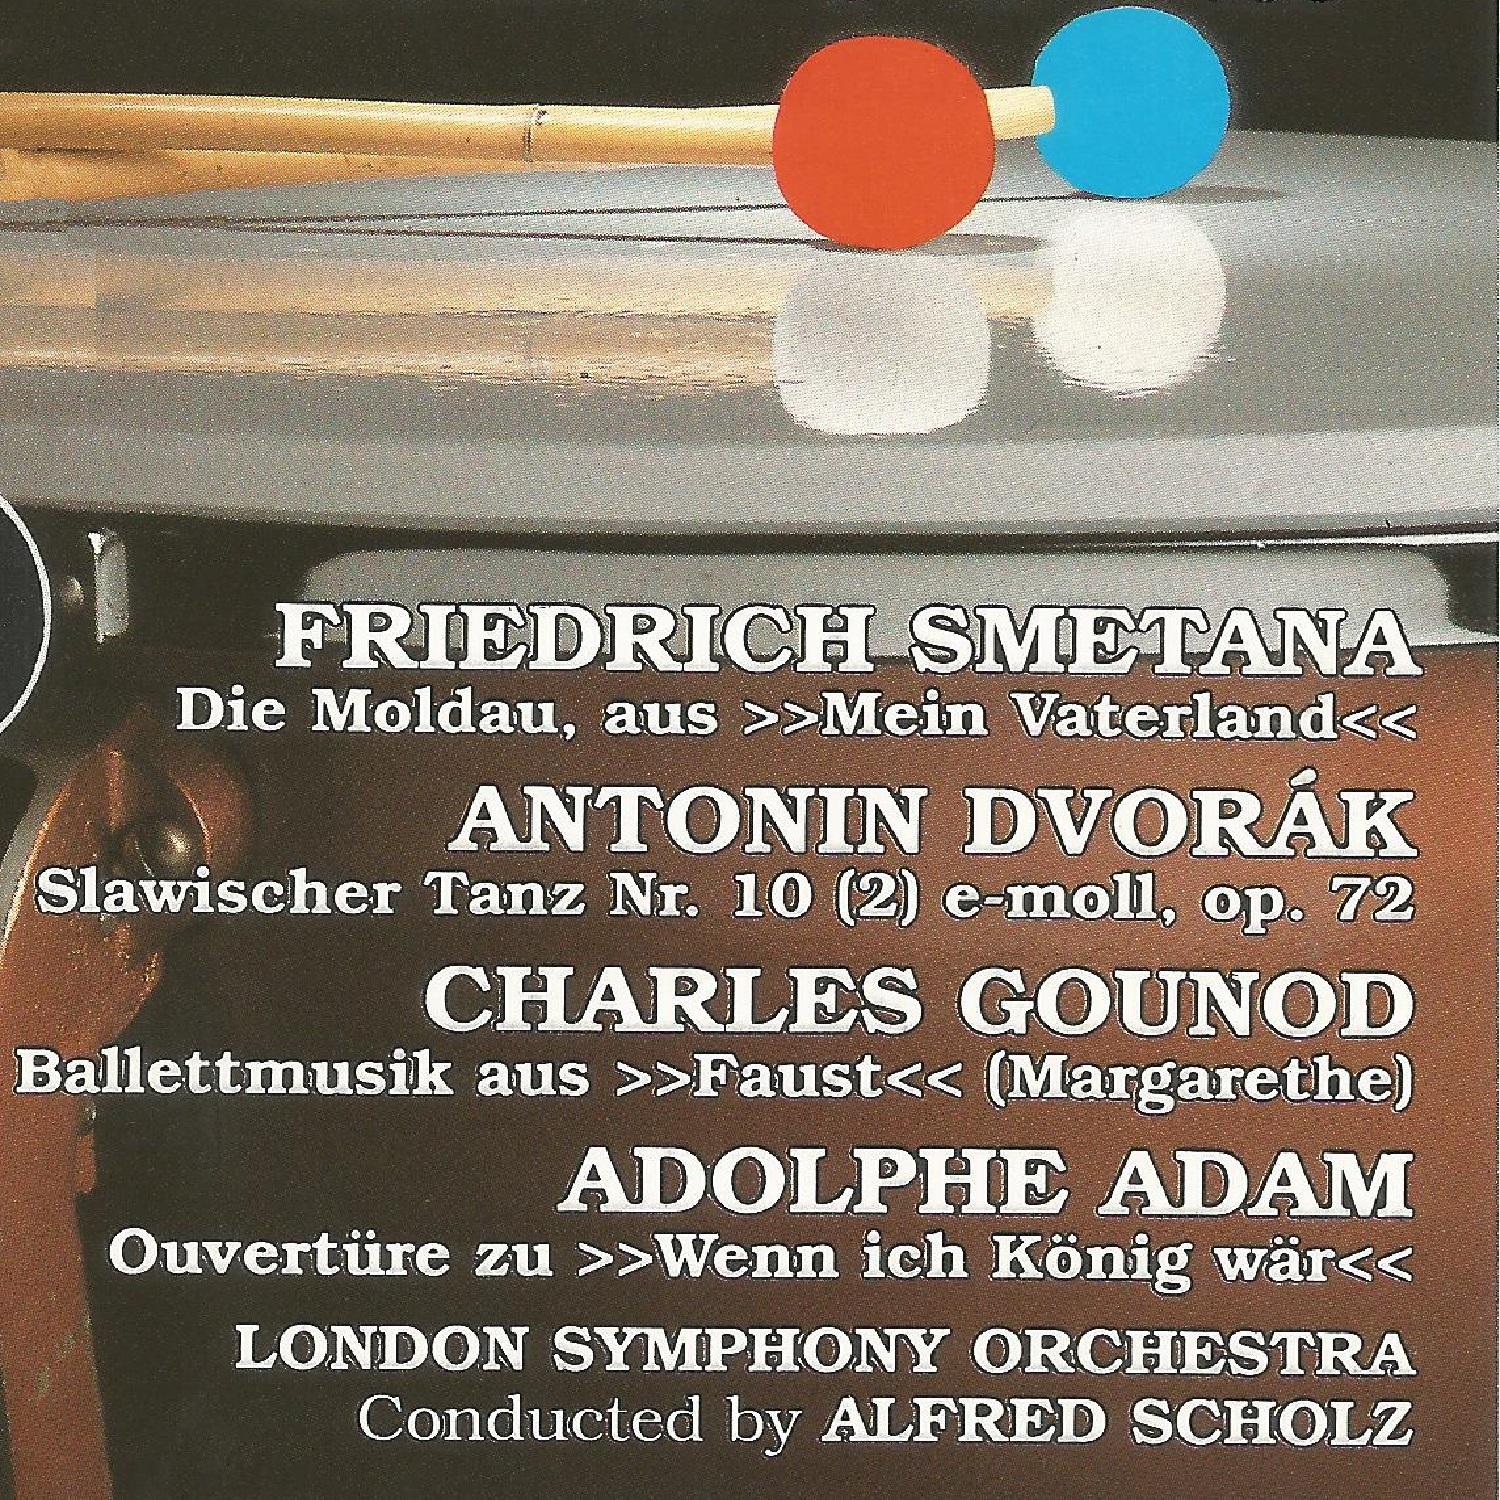 Friedrich Smetana, Antonin Dvora k, Charles Gounod, Adolphe Adam